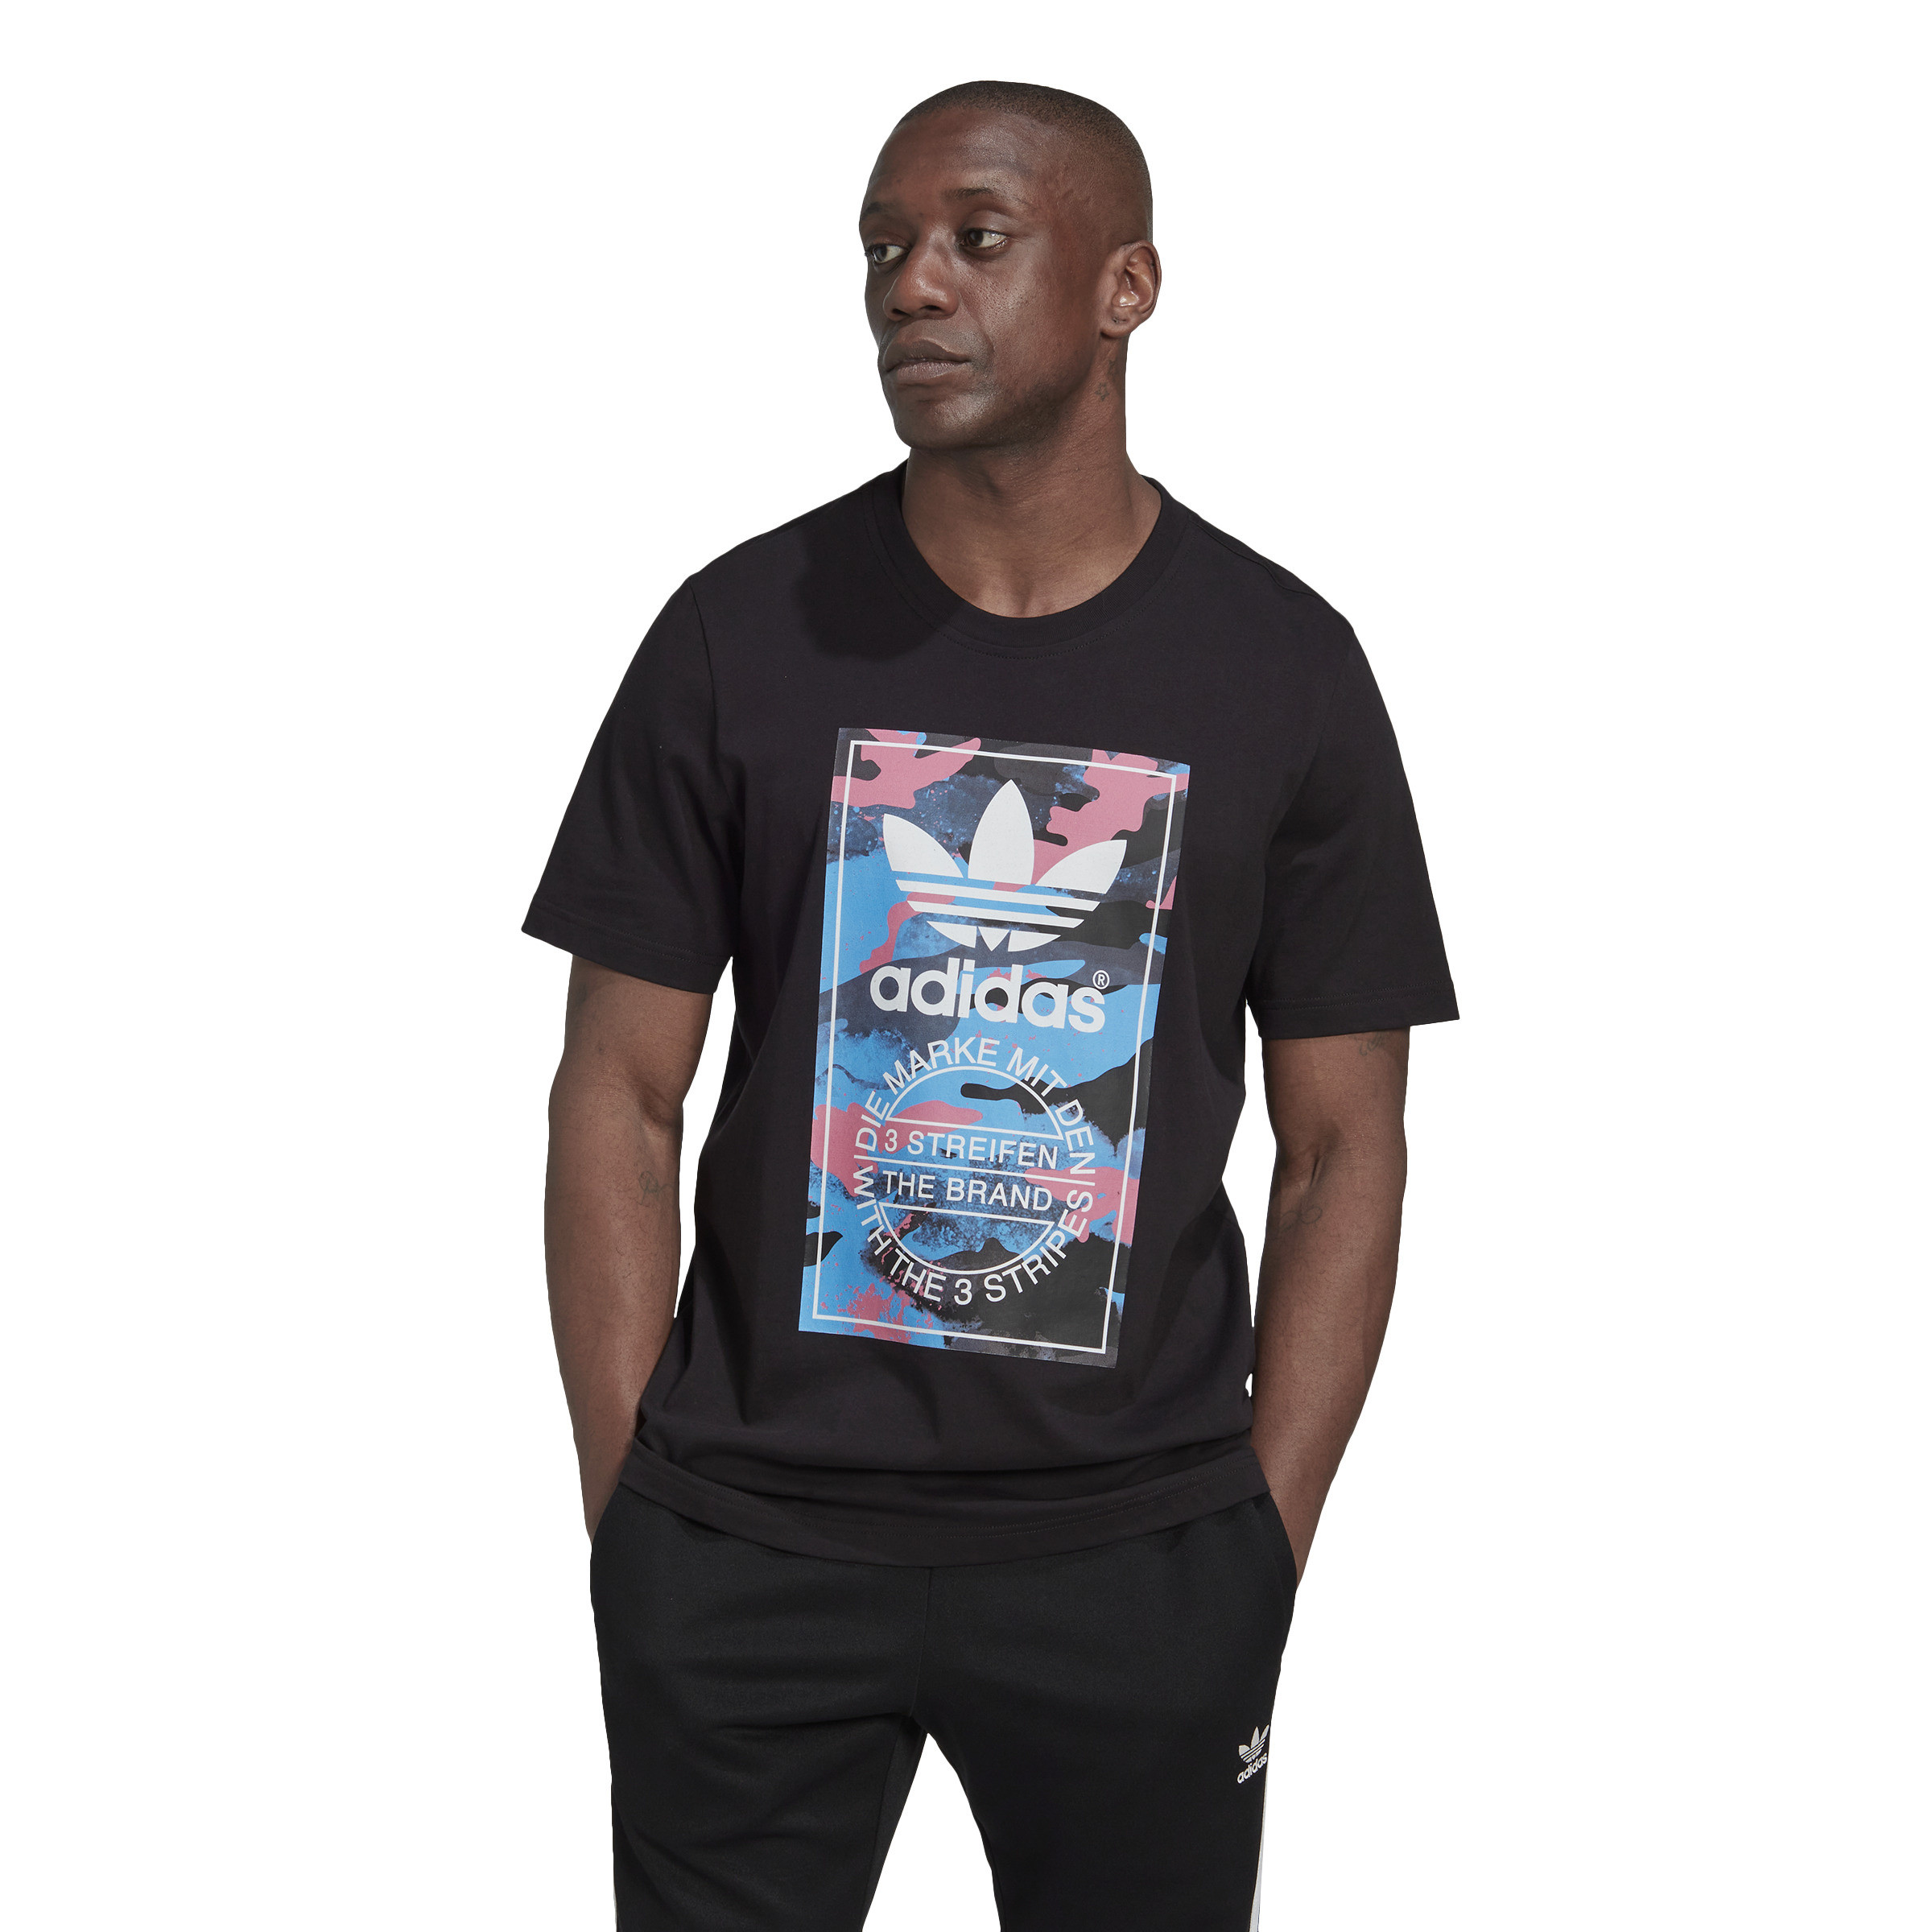 Adidas - Graphic Camo T-shirt, Black, large image number 4